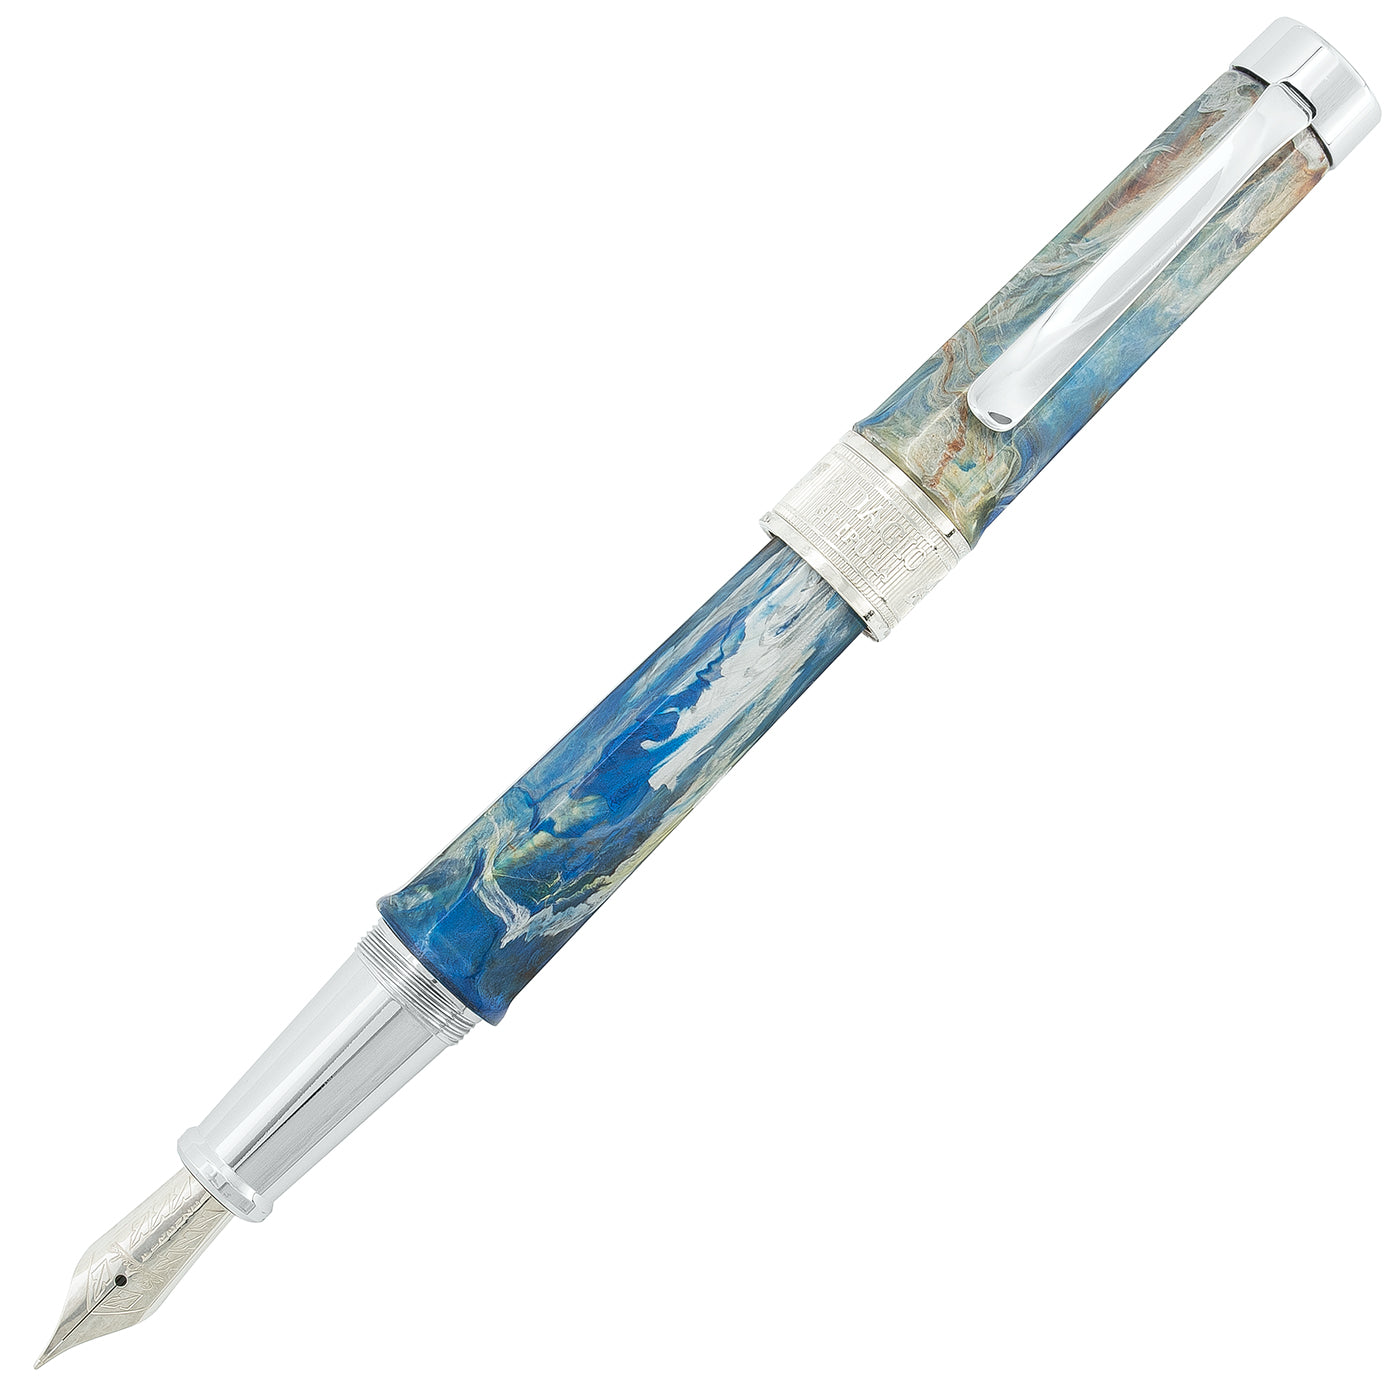 Stipula Adagio Fountain Pen- Light Blue